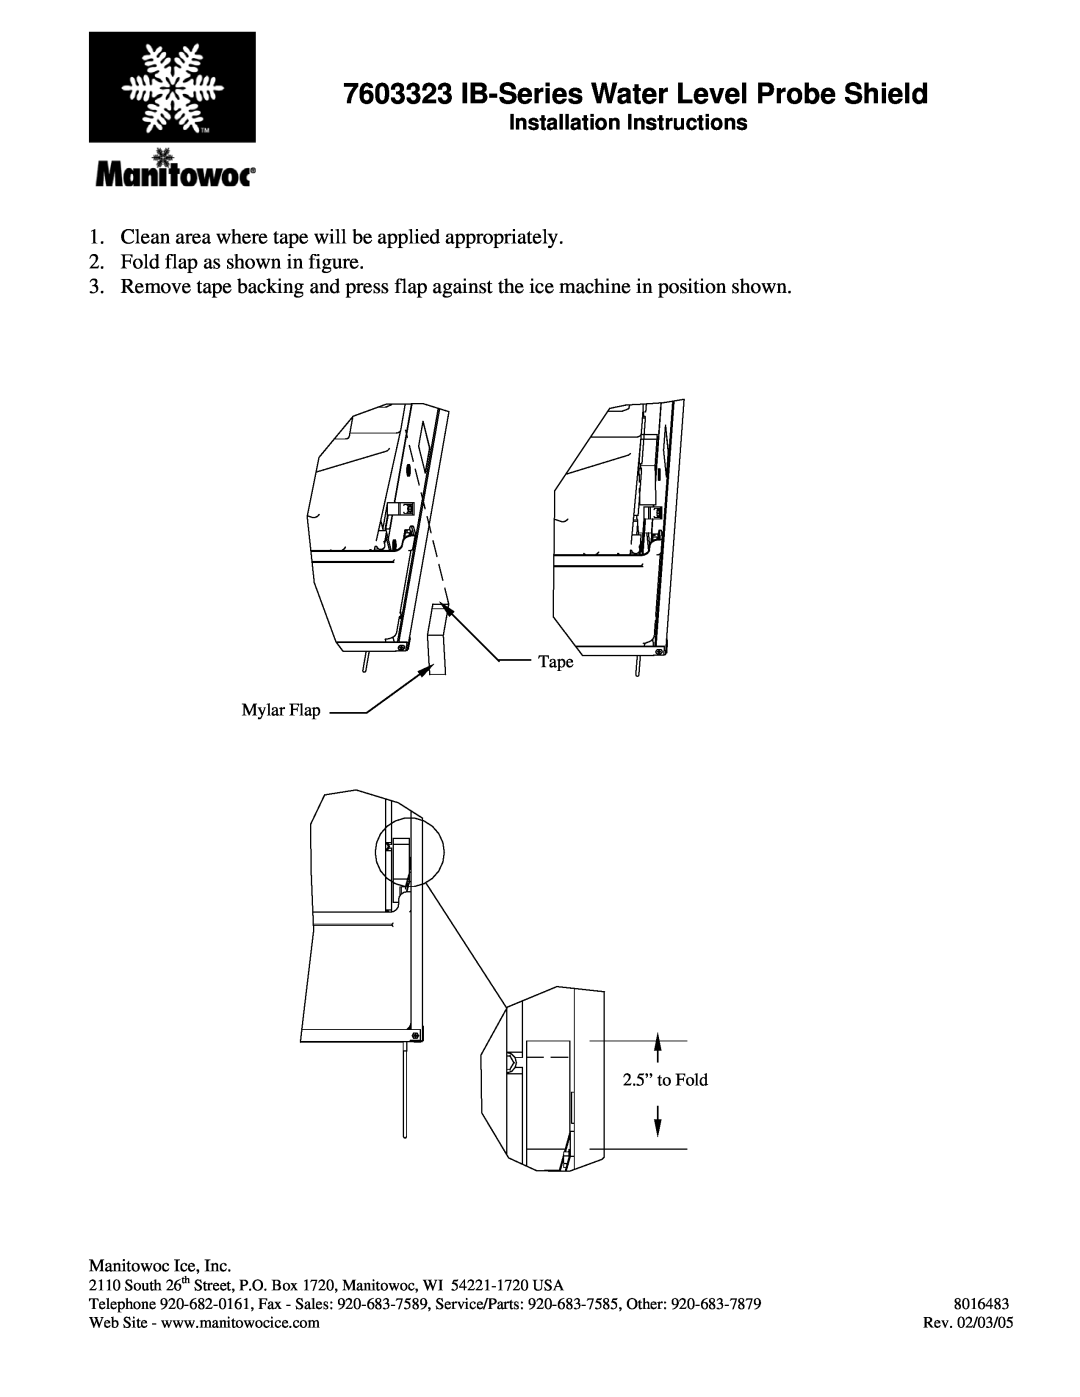 Manitowoc Ice 7603323 installation instructions IB-SeriesWater Level Probe Shield, Installation Instructions 